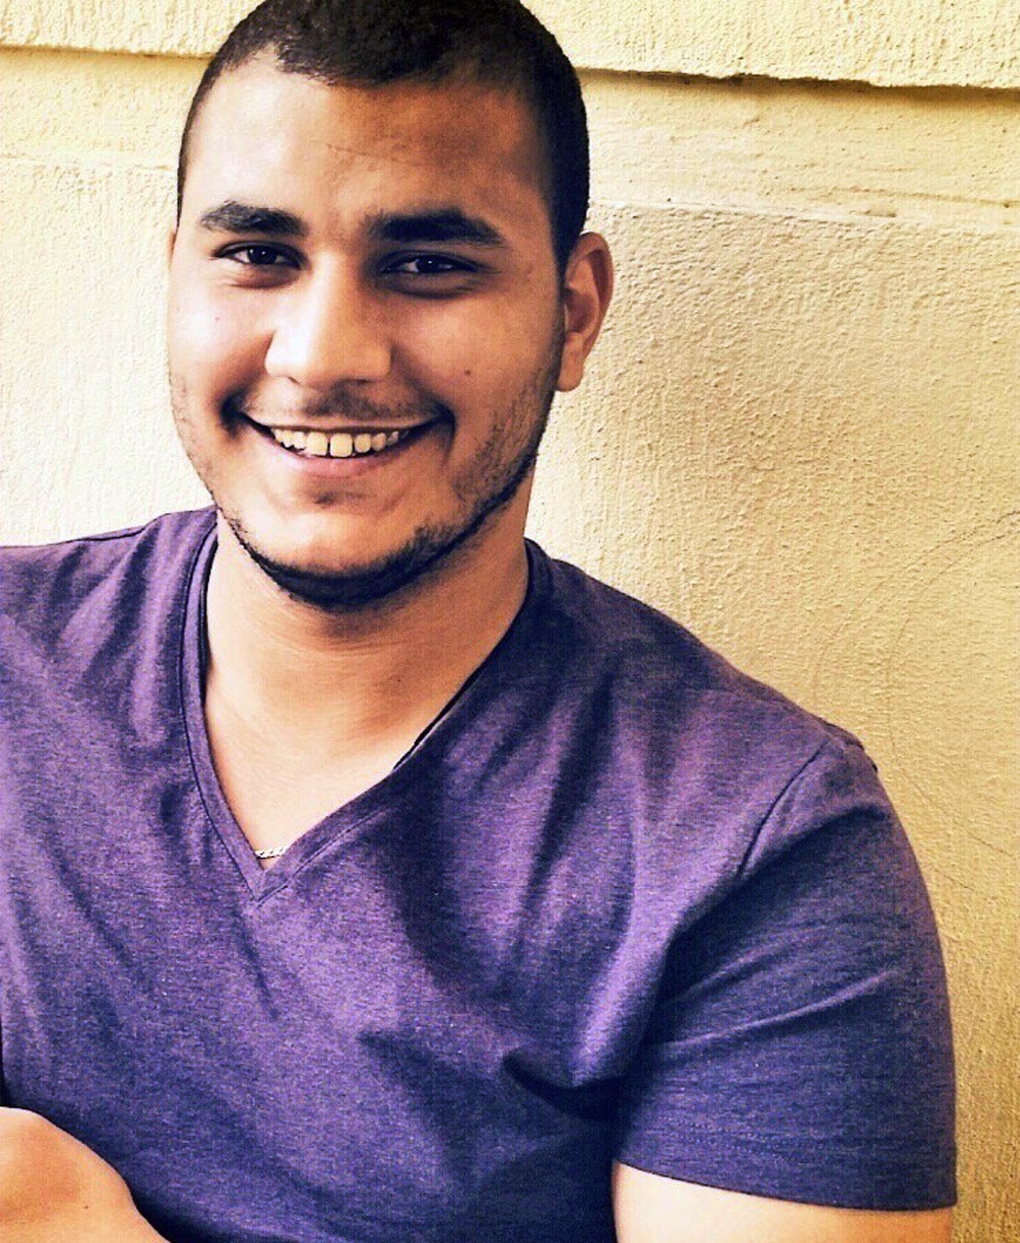 Egyptian student facing deportation